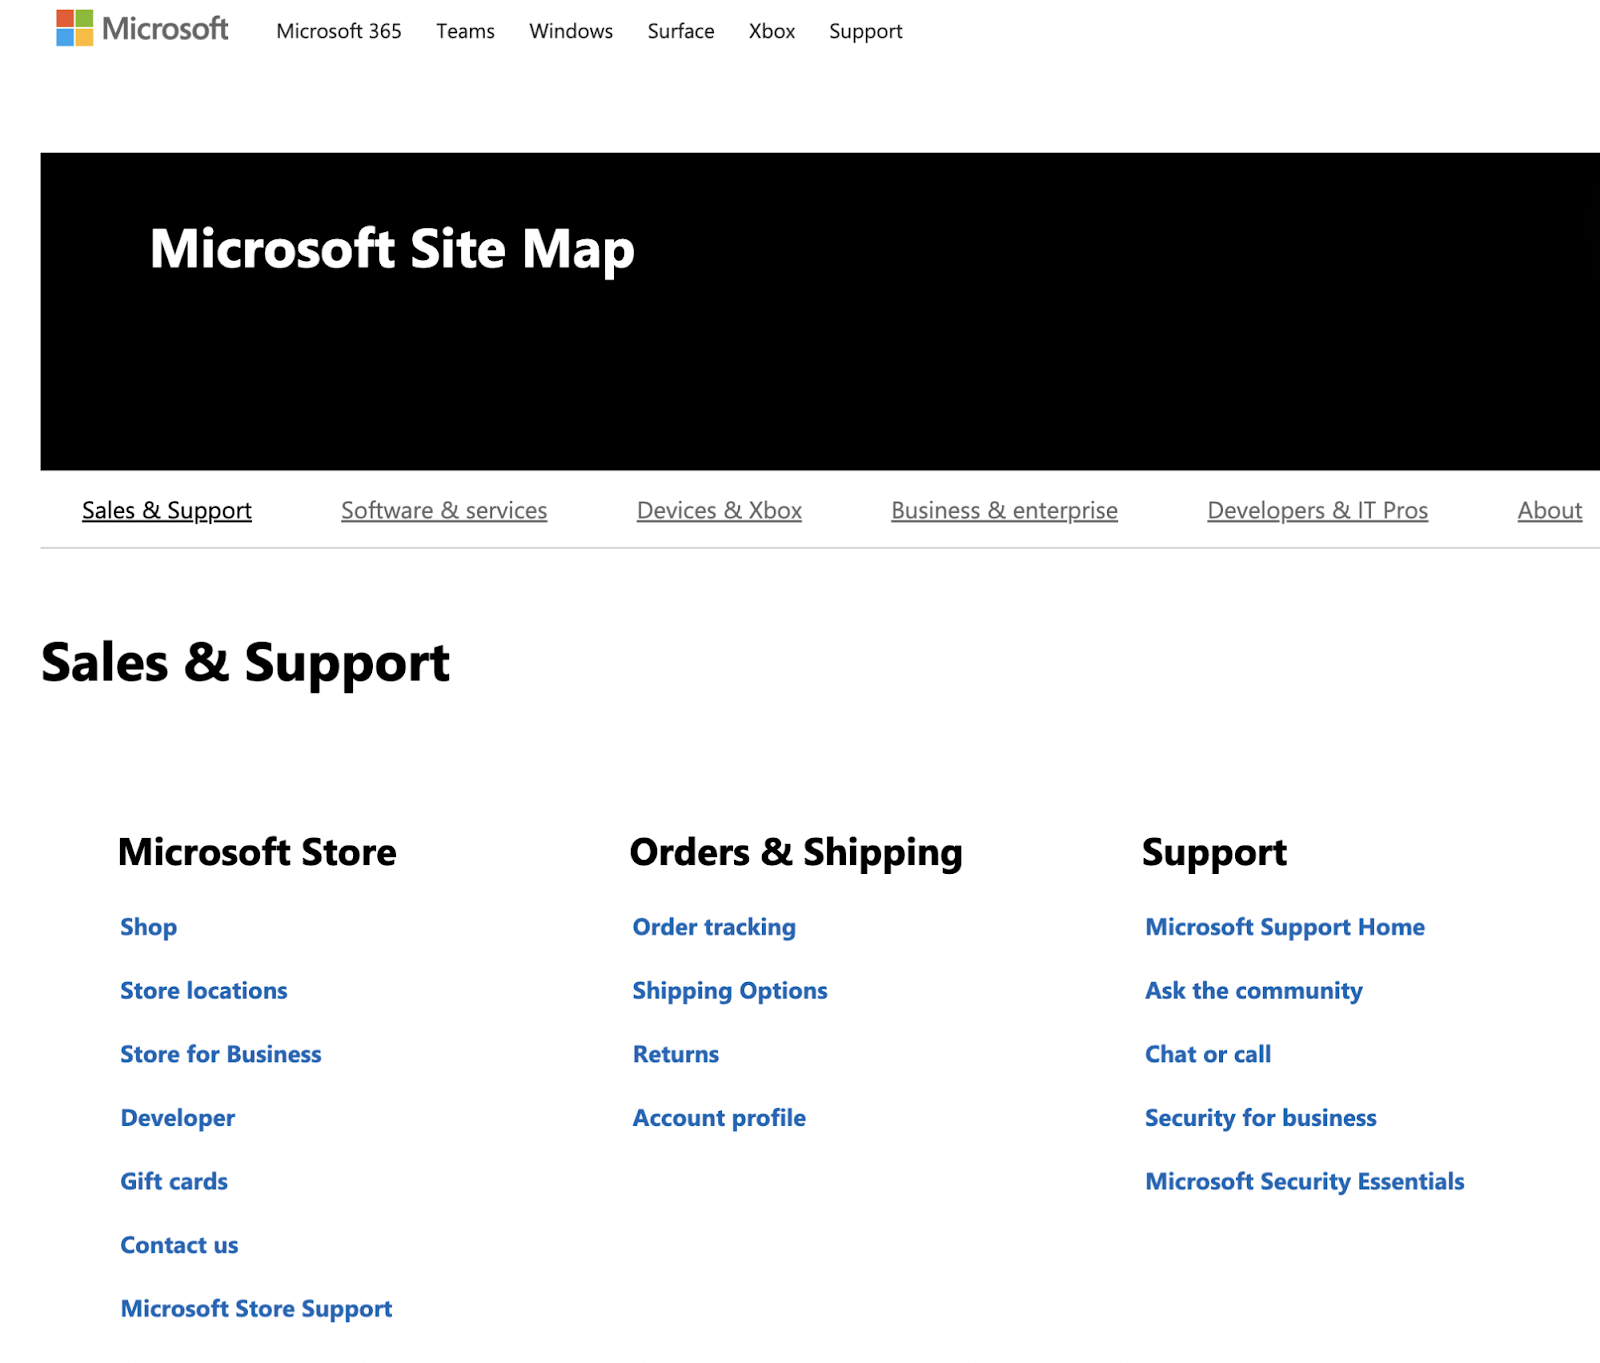 Microsoft’s HTML sitemap